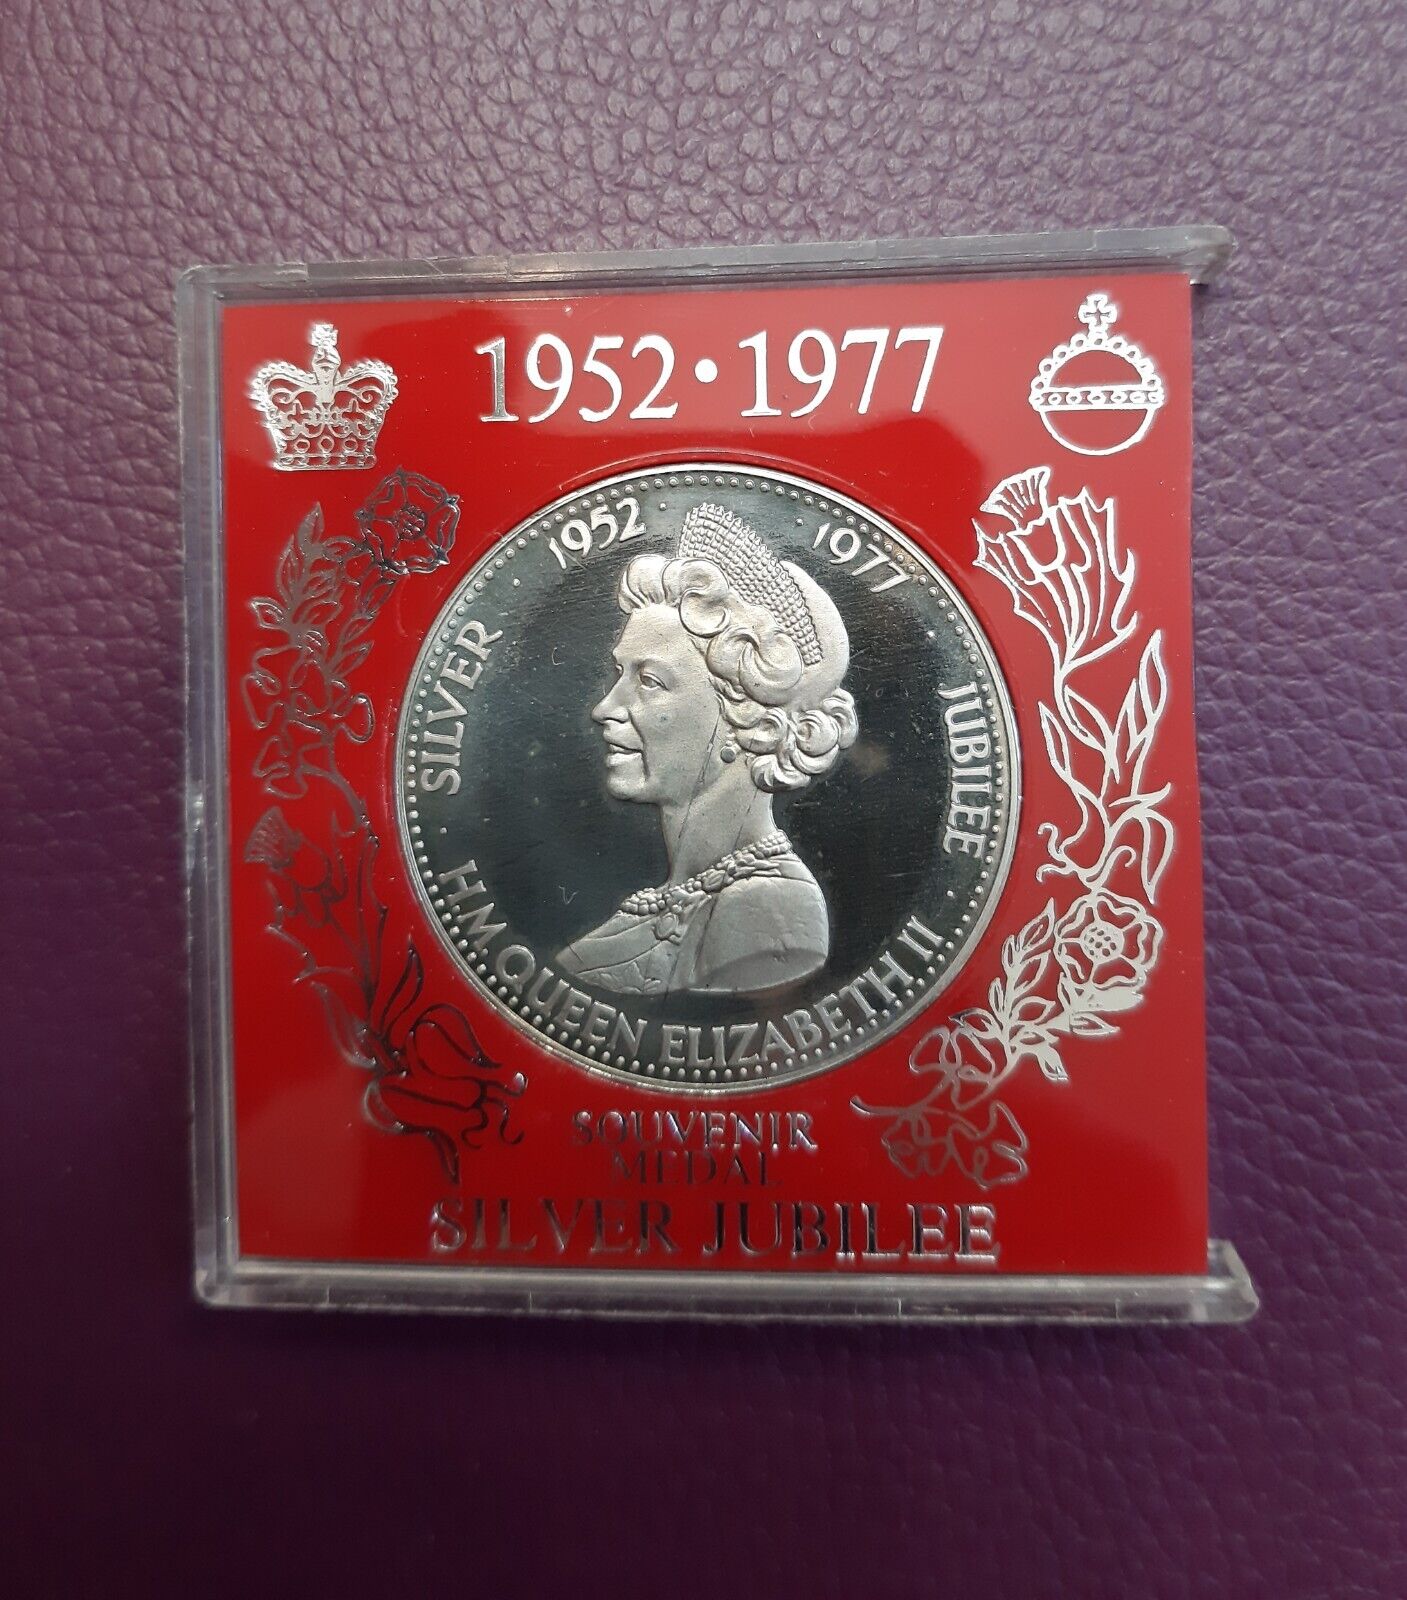 1977 Queen Elizabeth II Silver Jubilee Souvenir Medal Original Case. V.G.C.